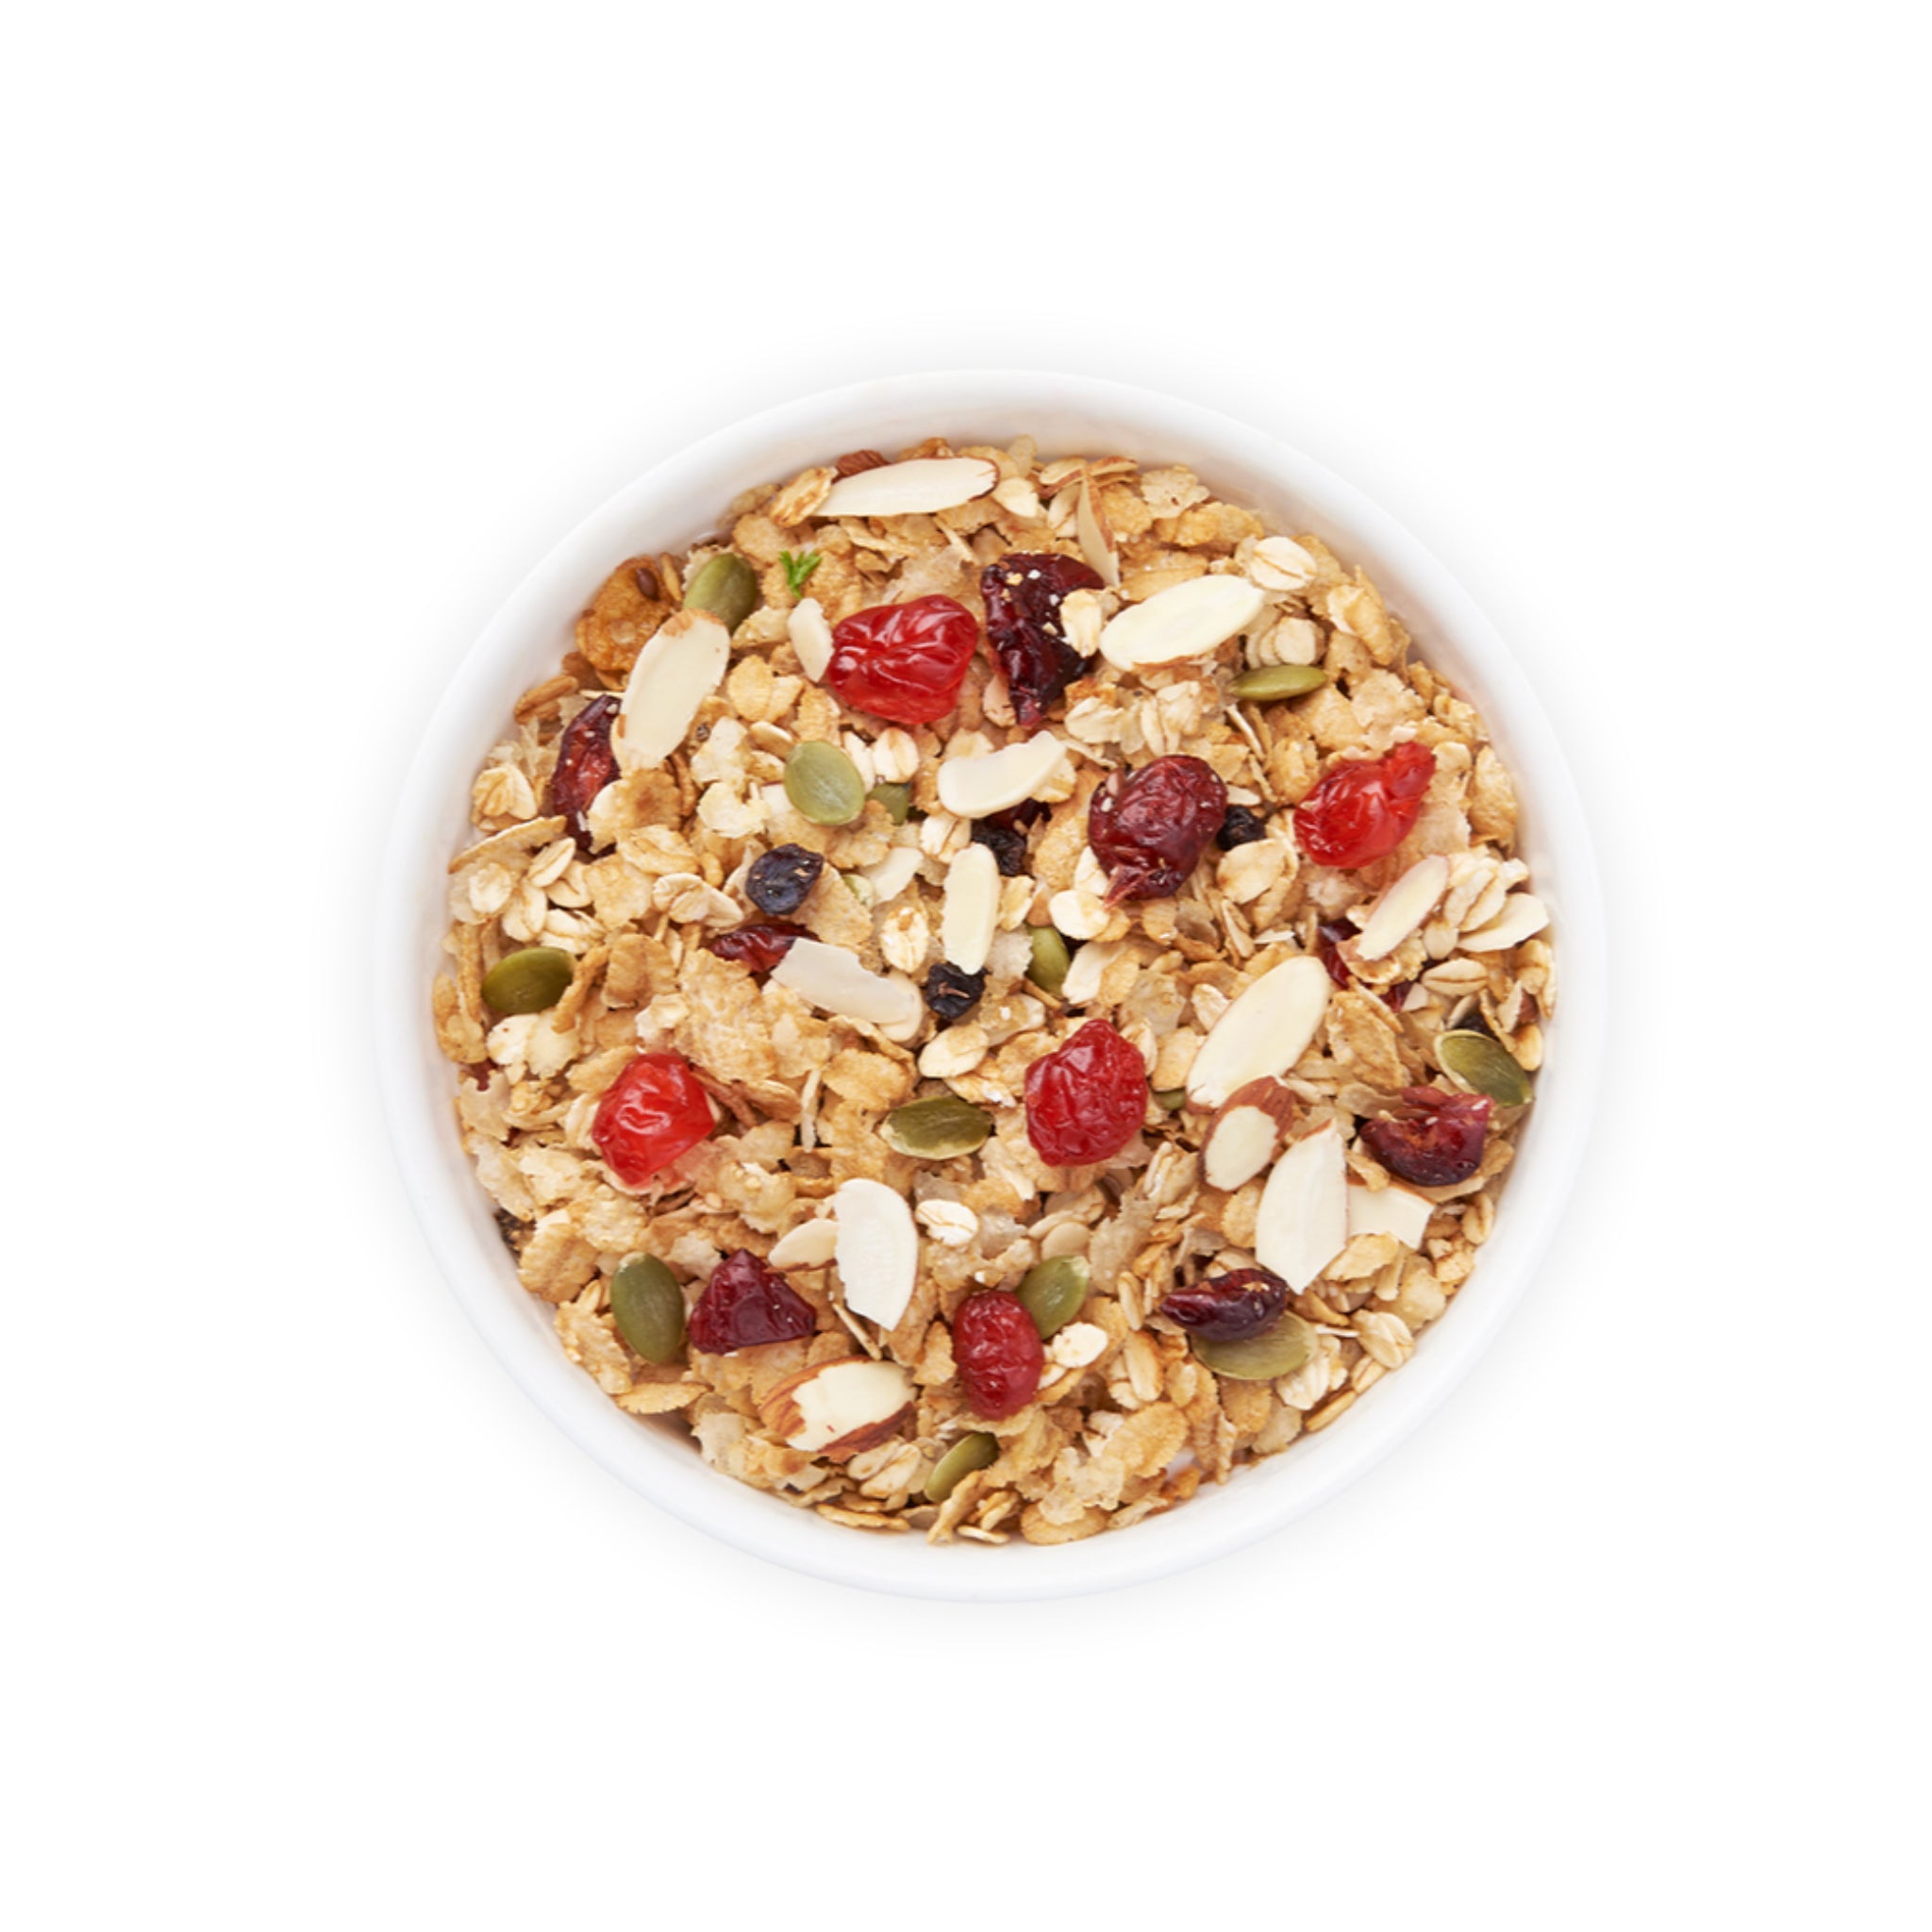 True Elements Muesli | Crunchy Nuts & Berries